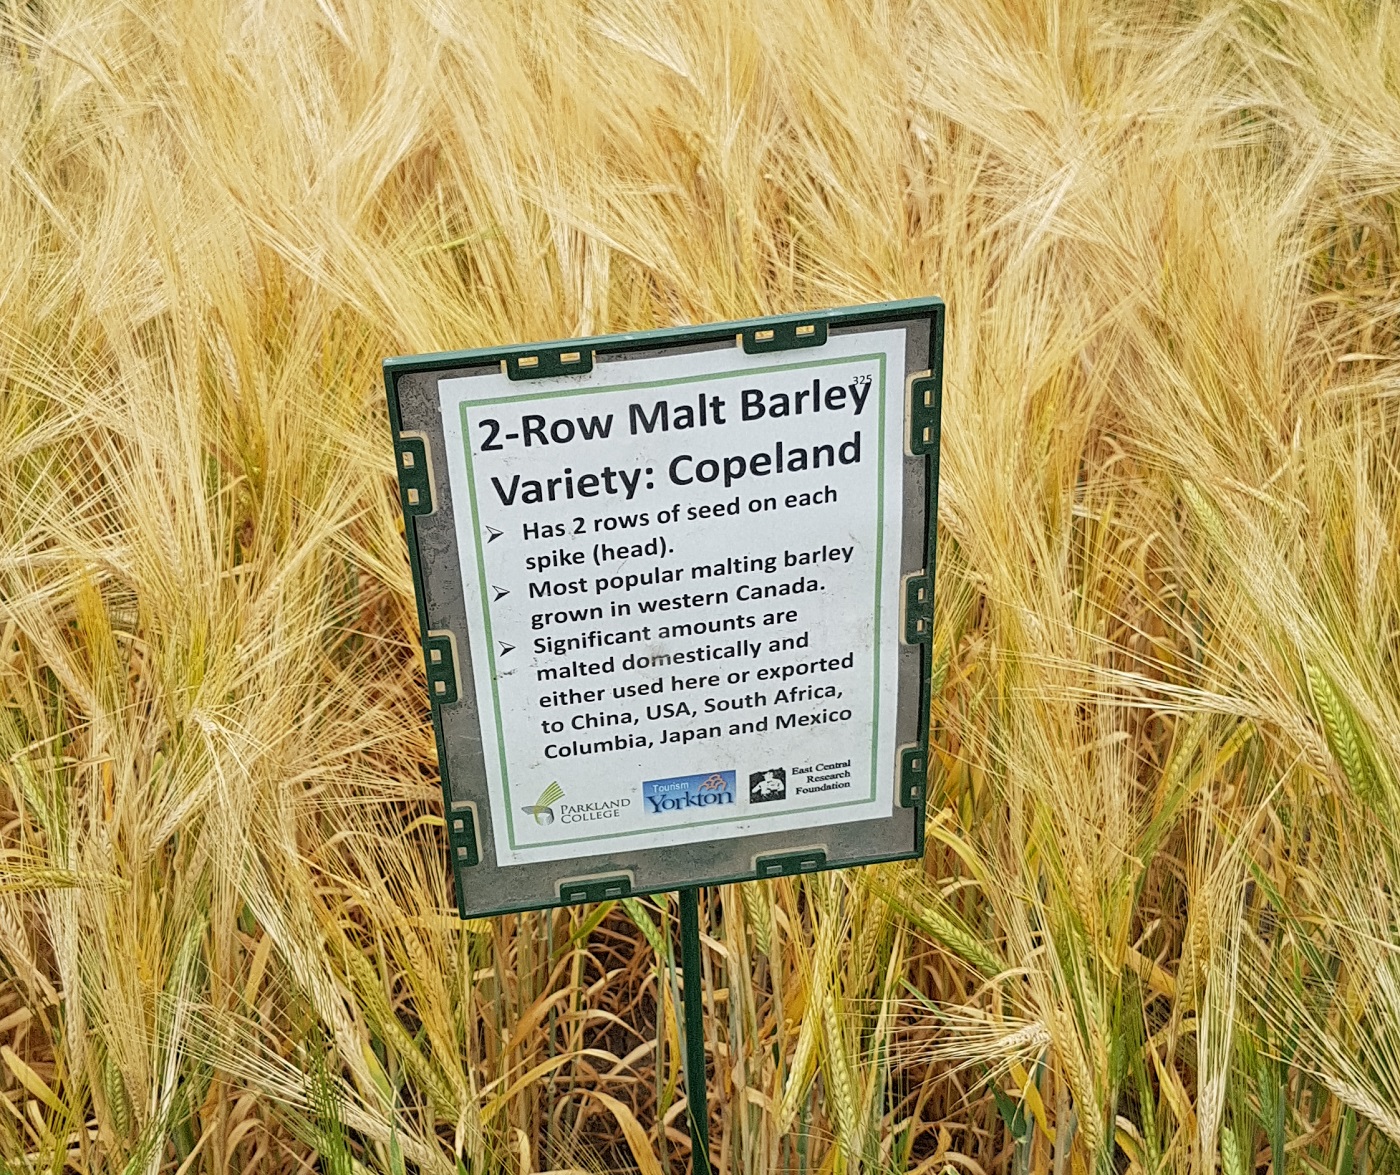 Crops of the Parkland Walking Tour - Malt barley near harvest time